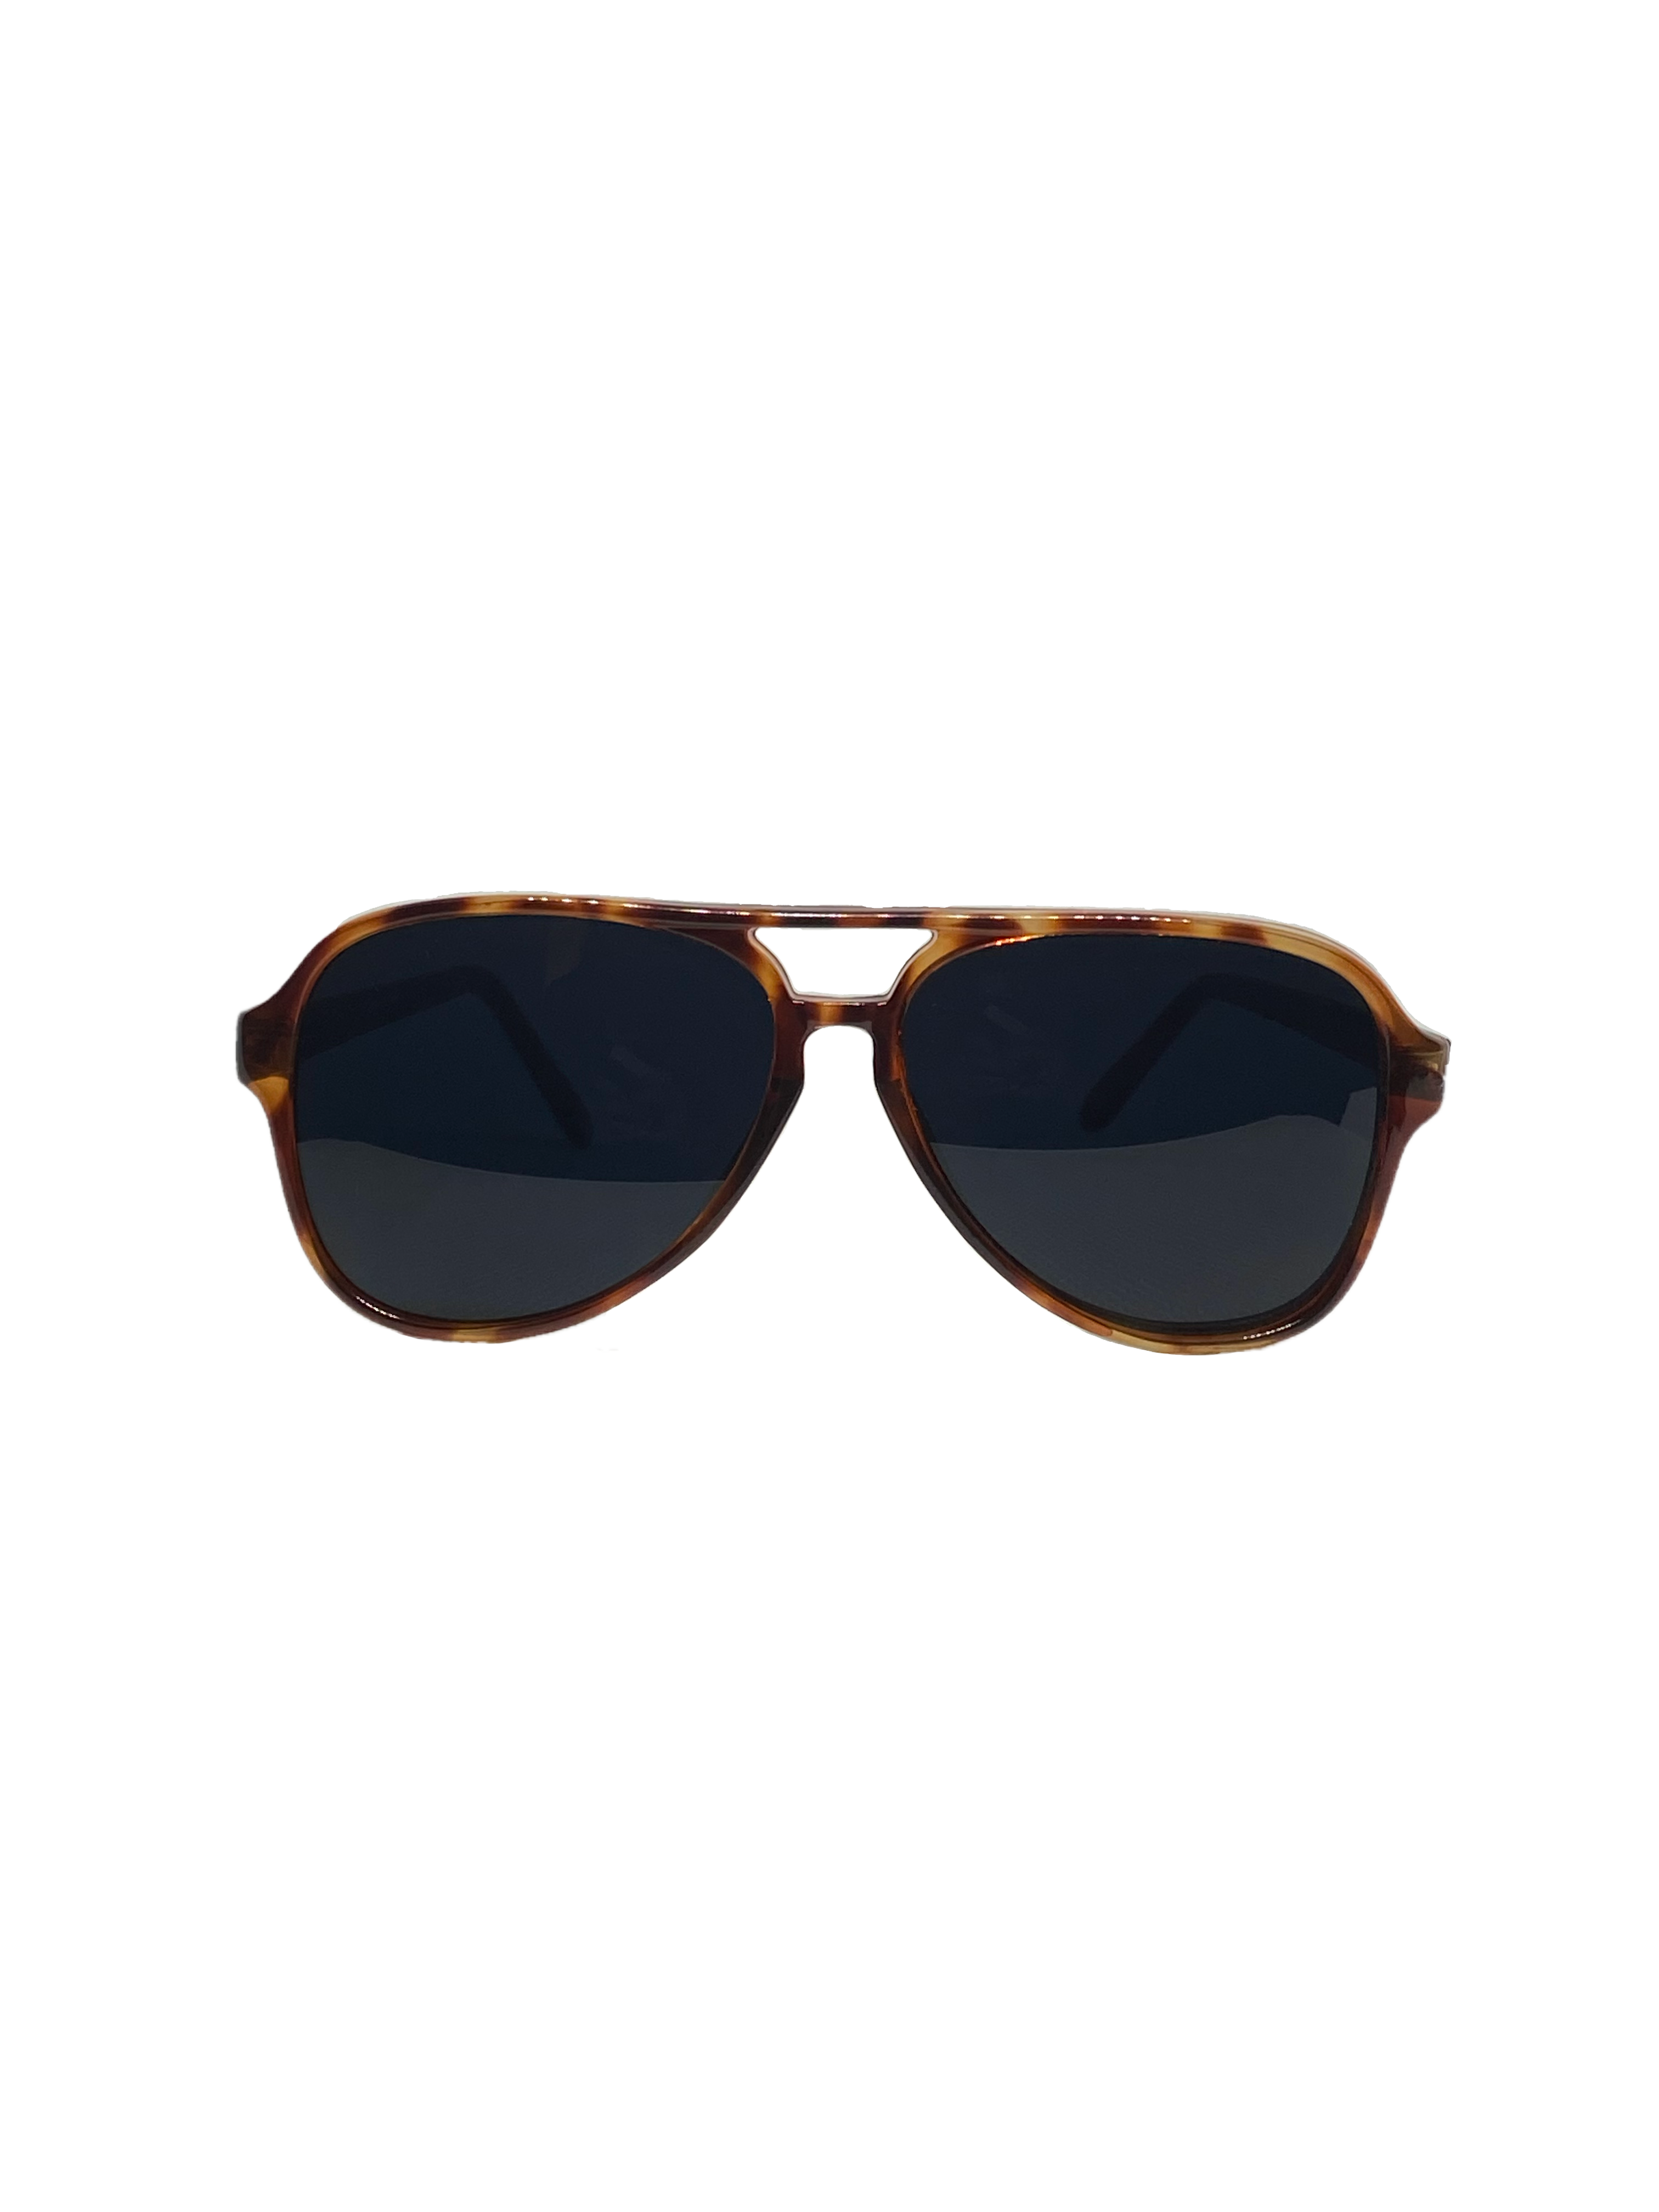 COLA Tortoise Classic Aviator Sunglasses